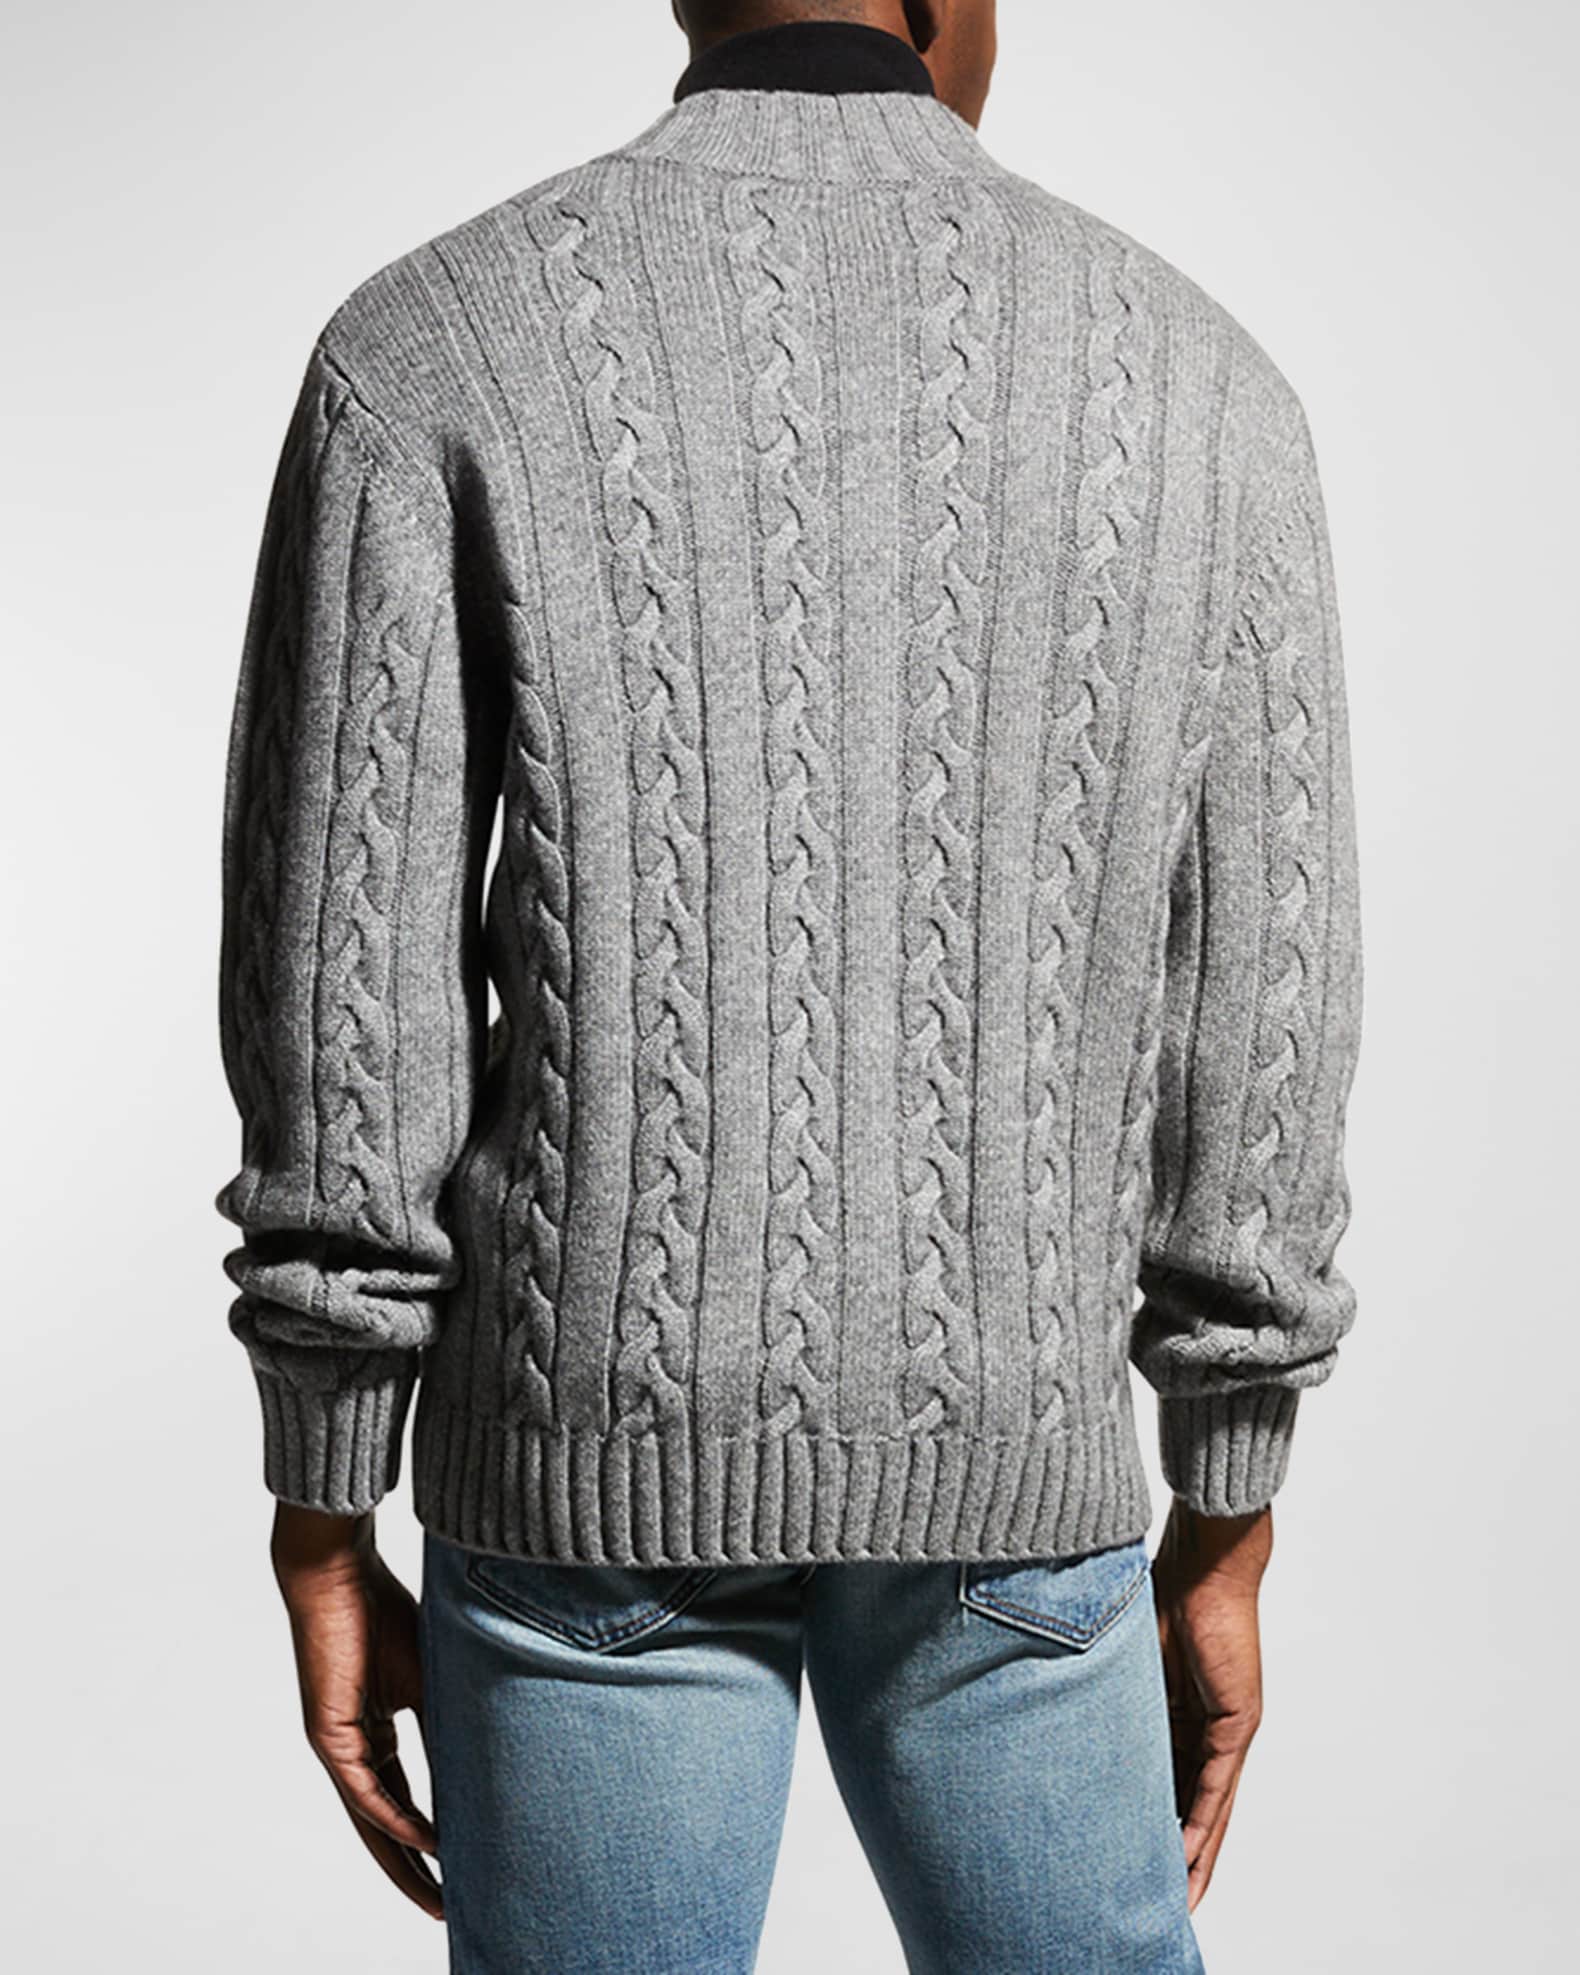 Neiman Marcus Men S Merino Wool Cashmere Full Zip Cable Sweater Neiman Marcus